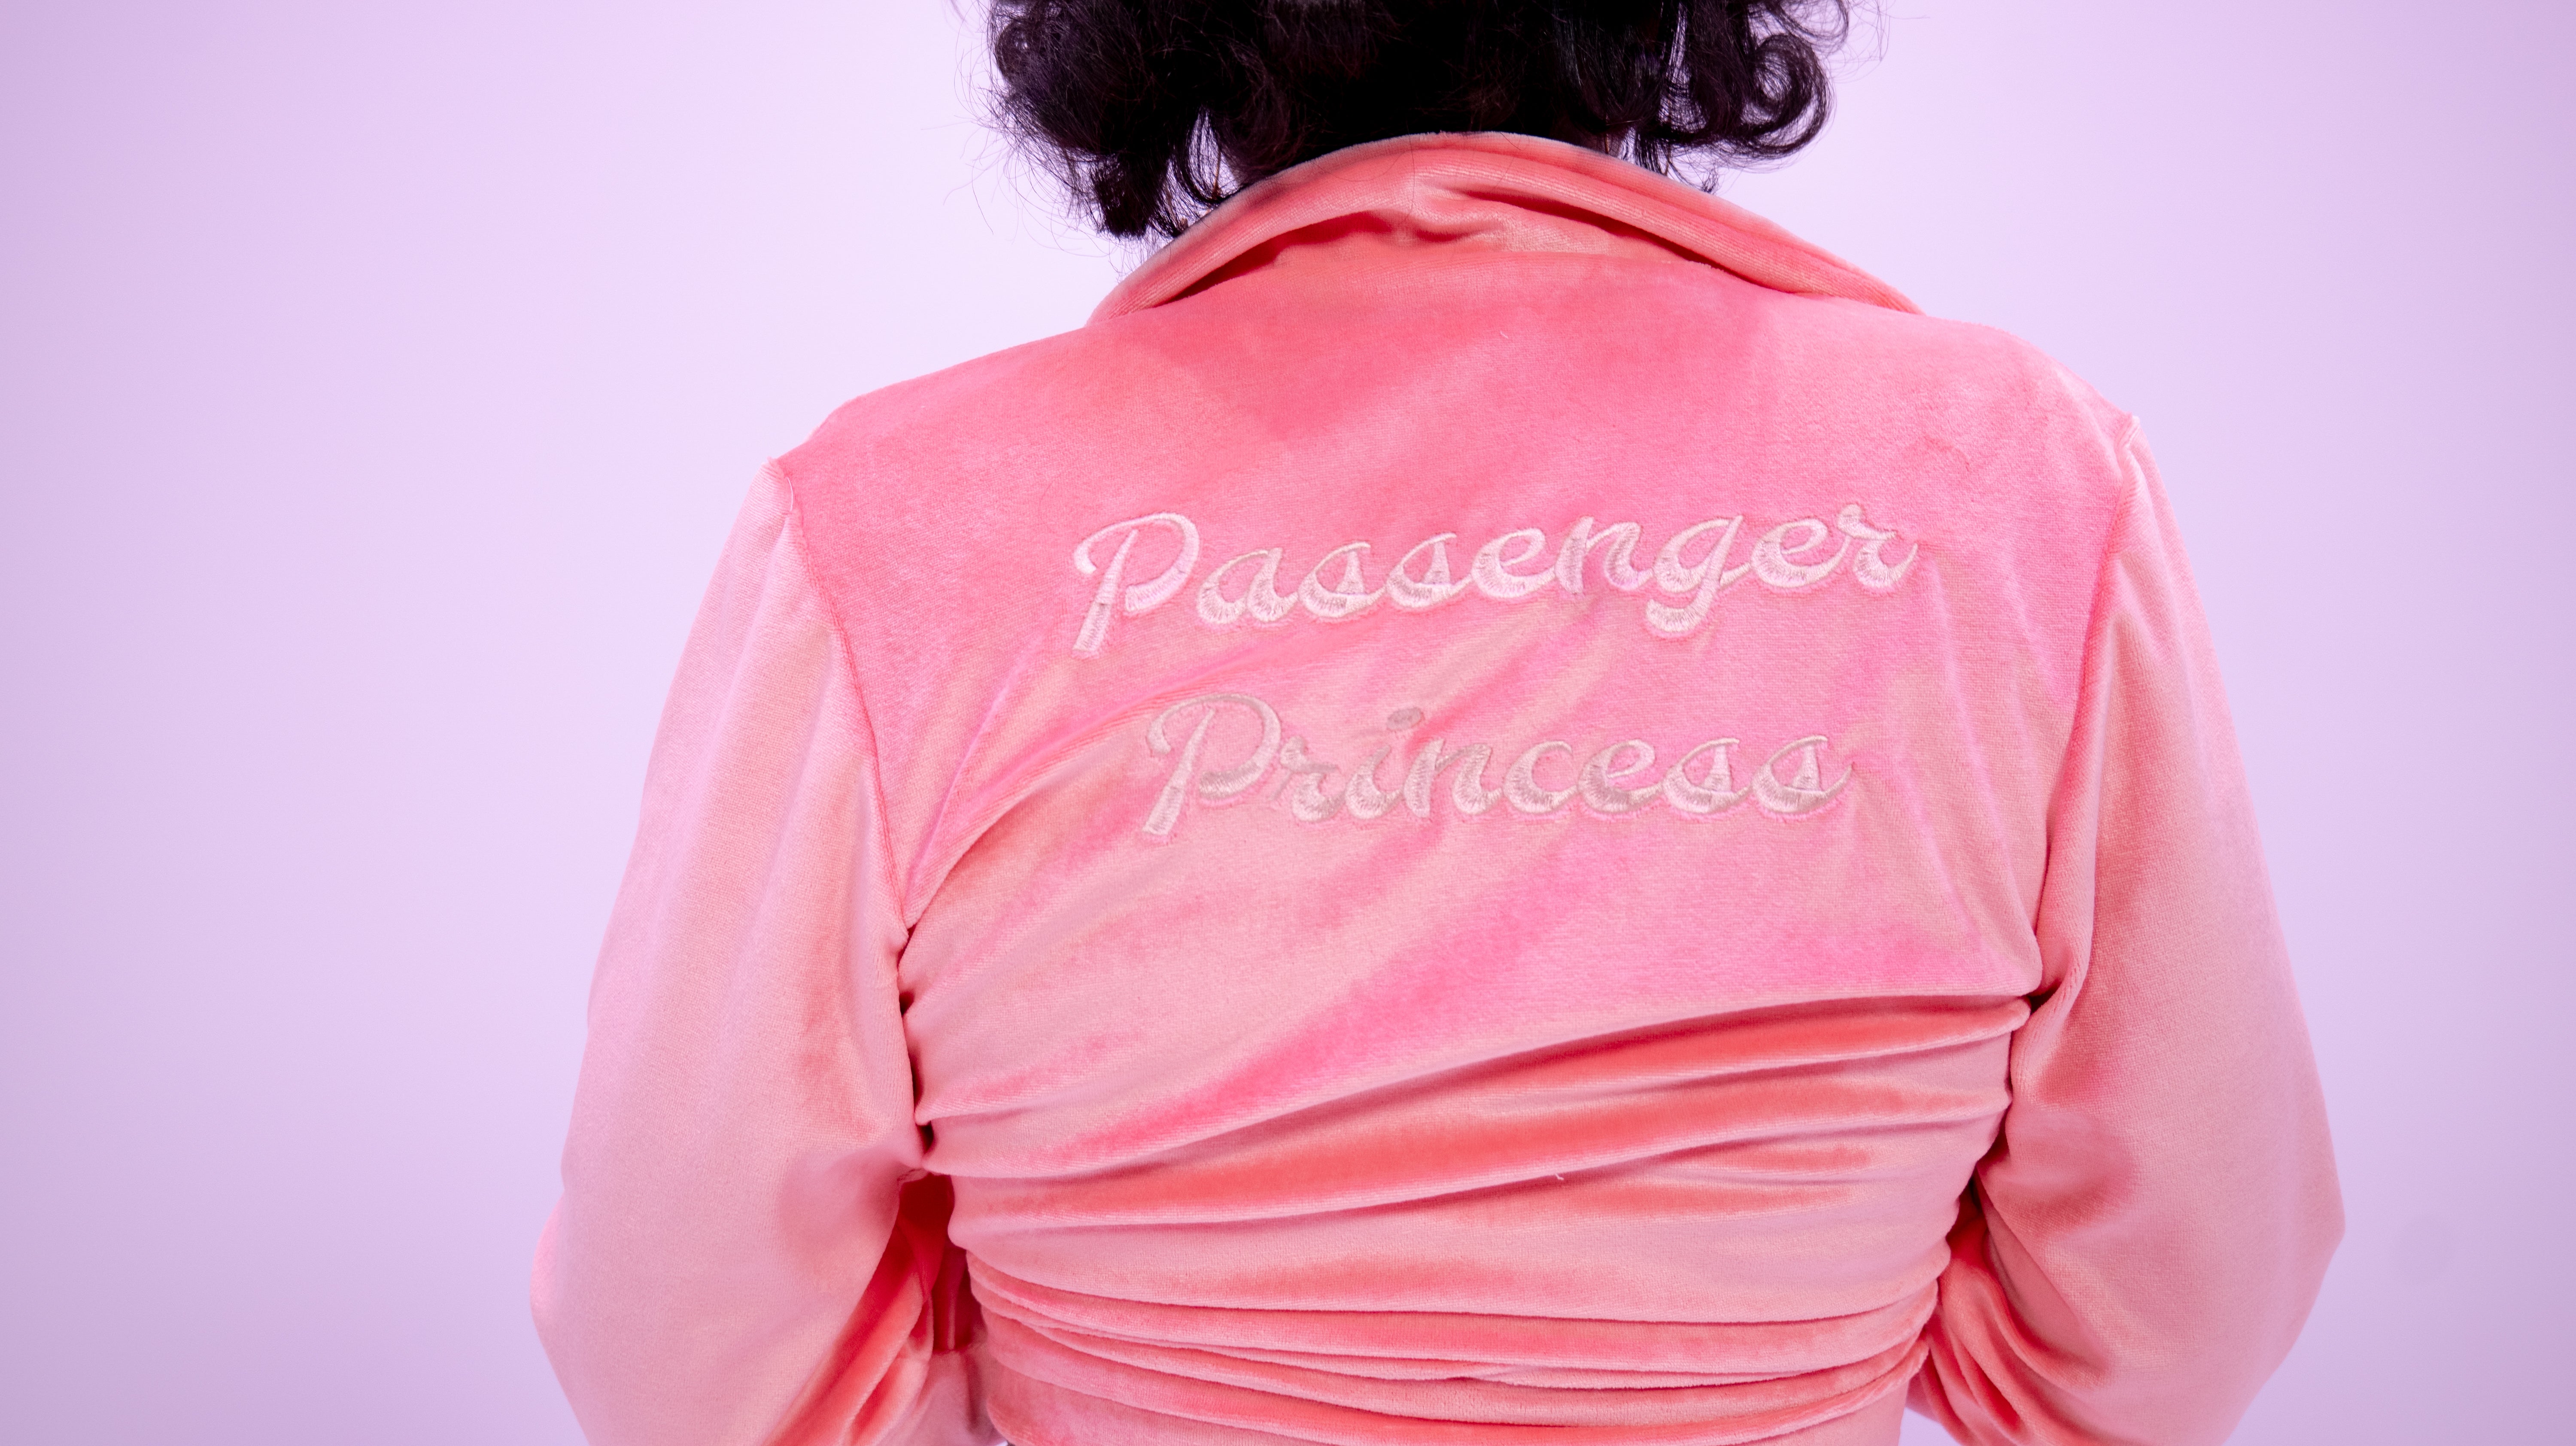 The Passenger Princess Track Suit - Hoodless